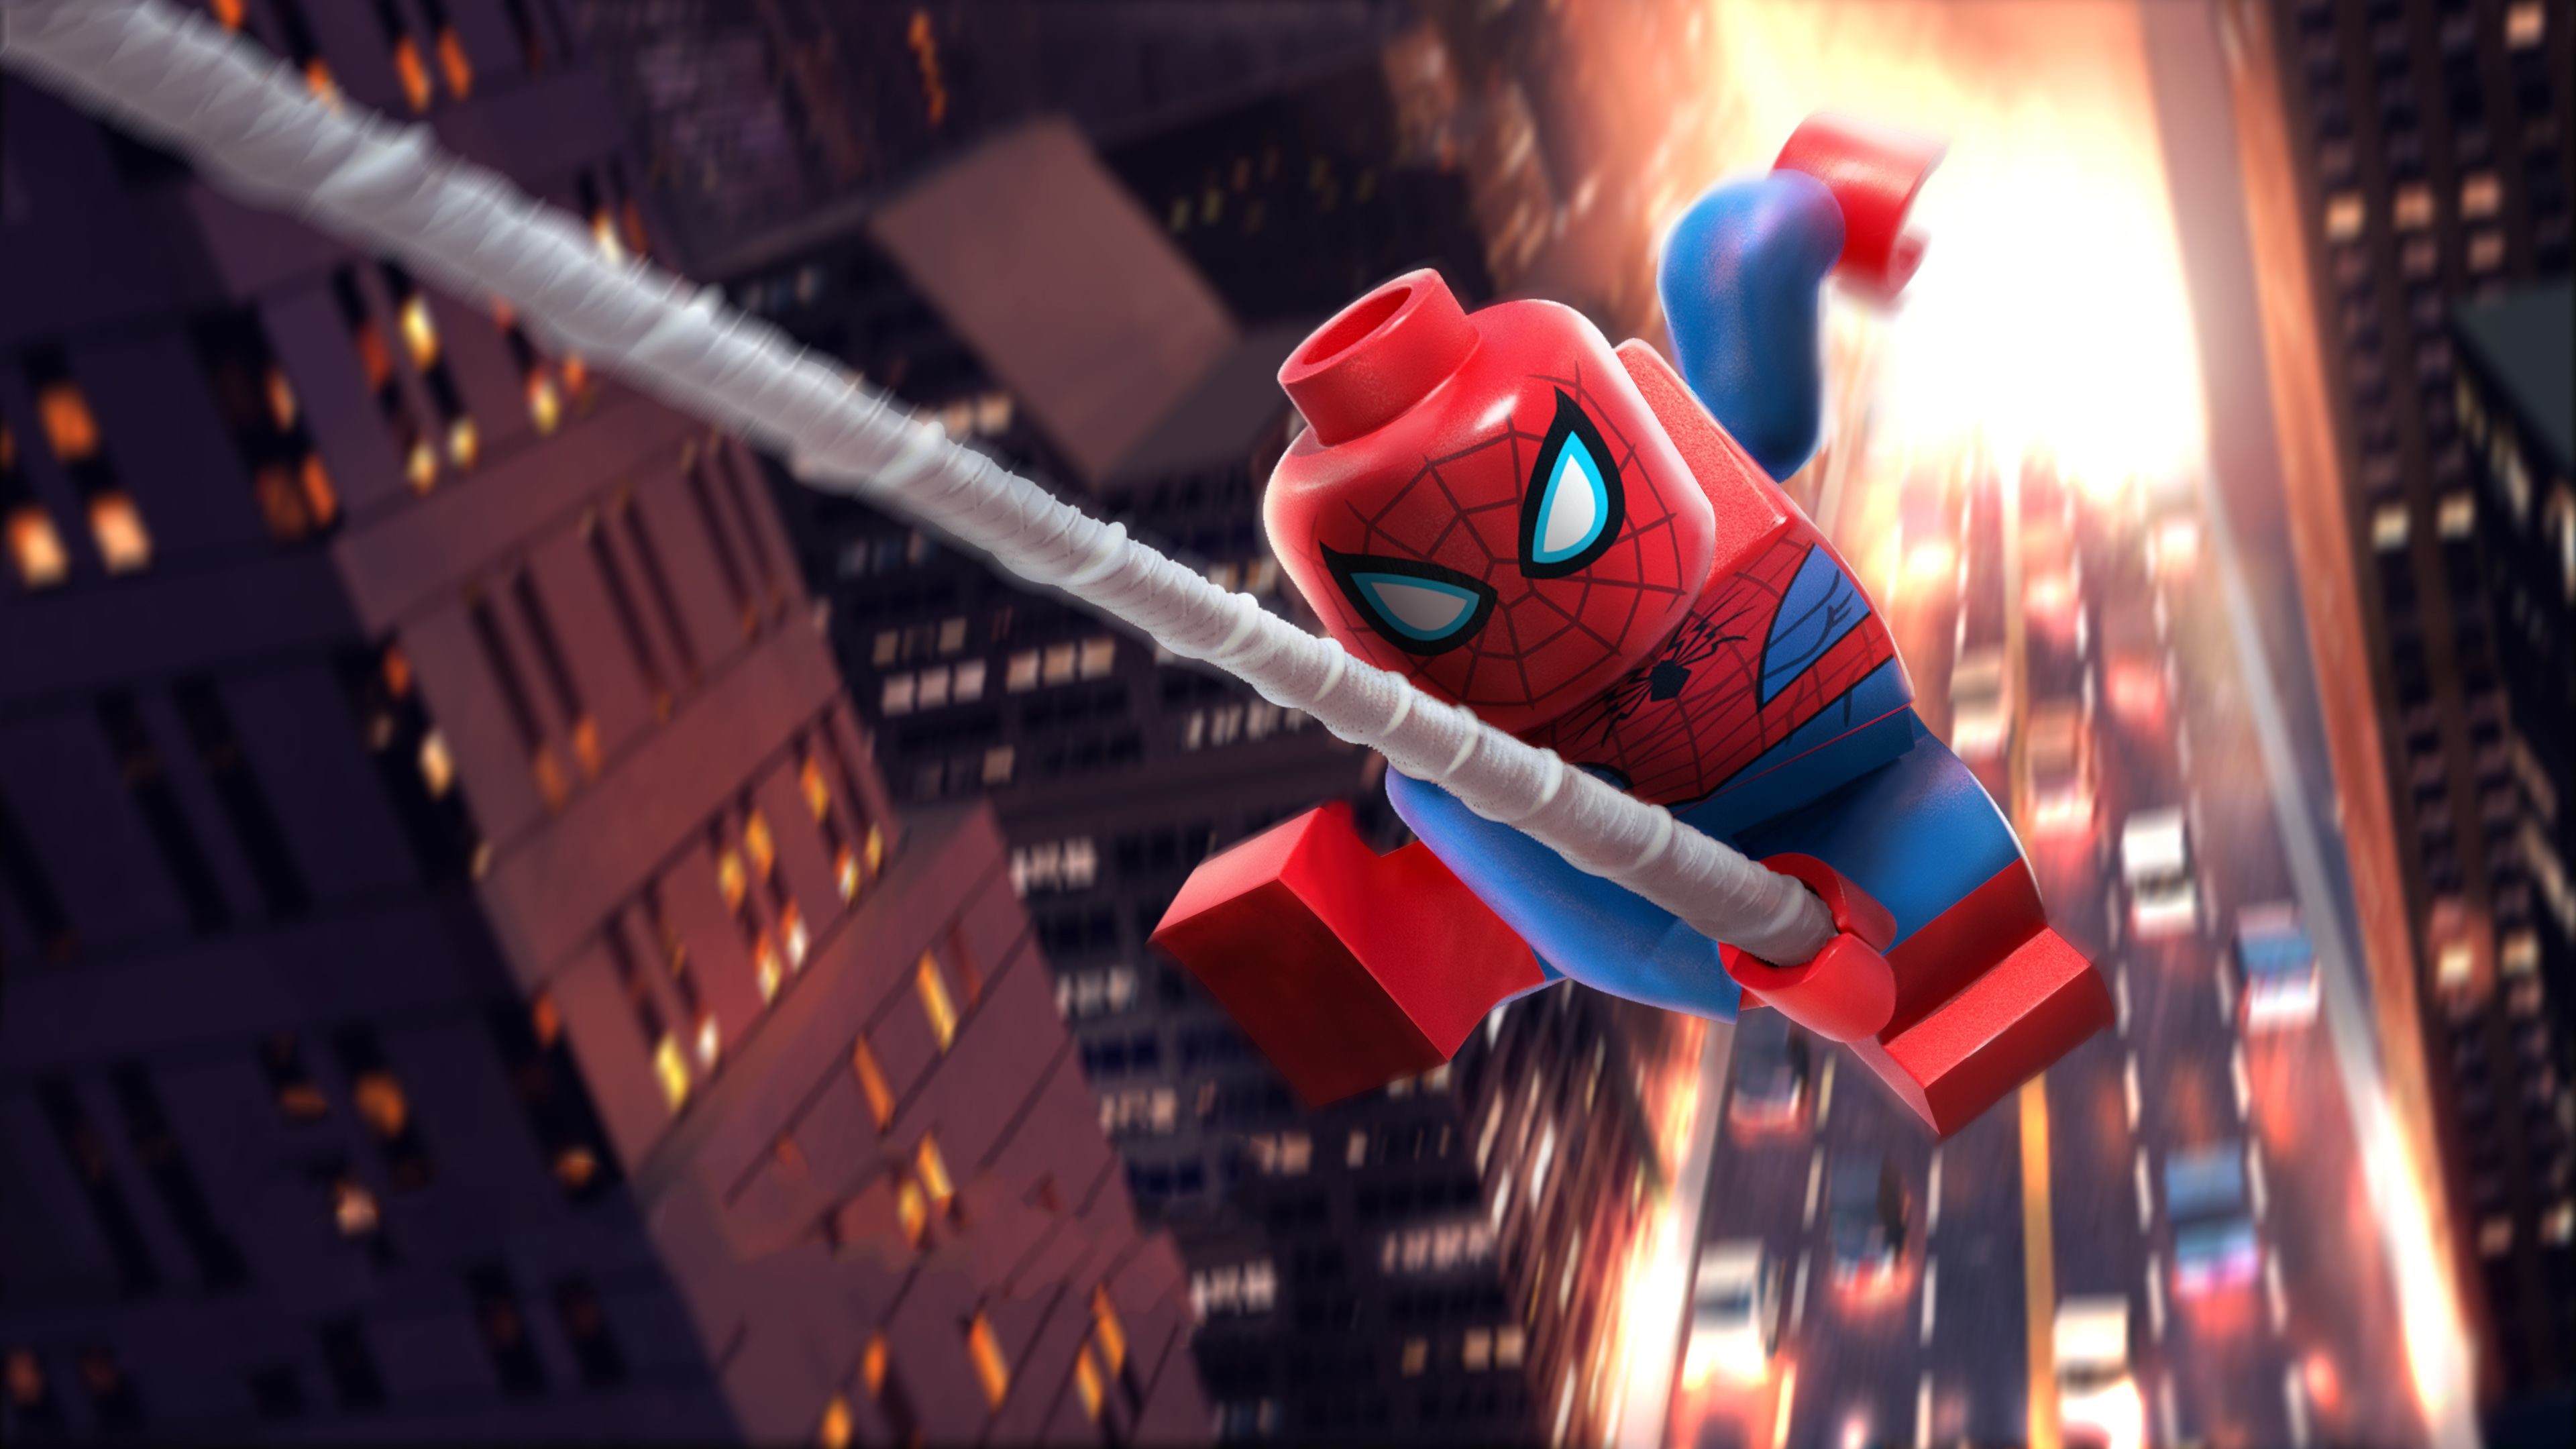 3840x2160, Lego Spiderman 5k Superheroes Wallpapers, - Lego Spider Man Vexed By Venom - HD Wallpaper 